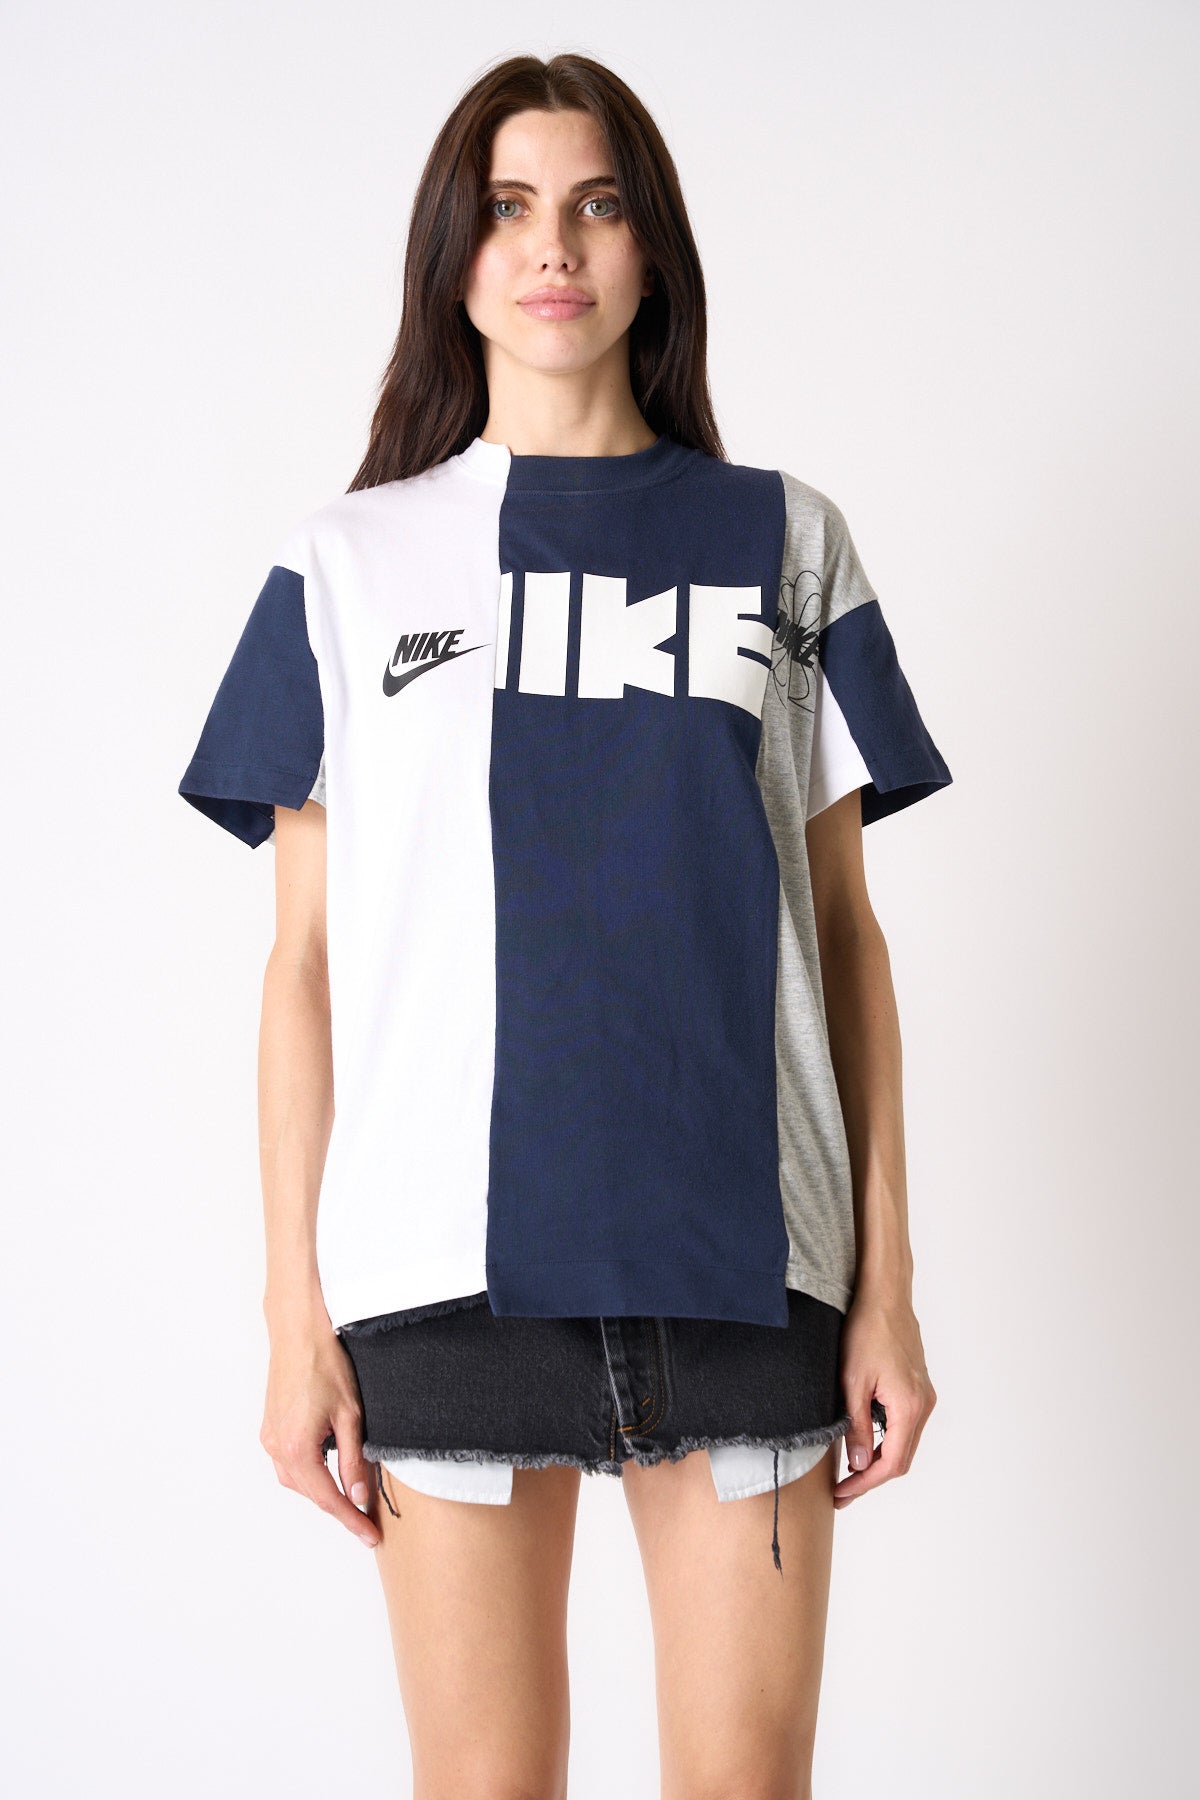 NAVYサイズXSサイズ sacai nike tee t-shirt navy - Tシャツ(半袖/袖なし)